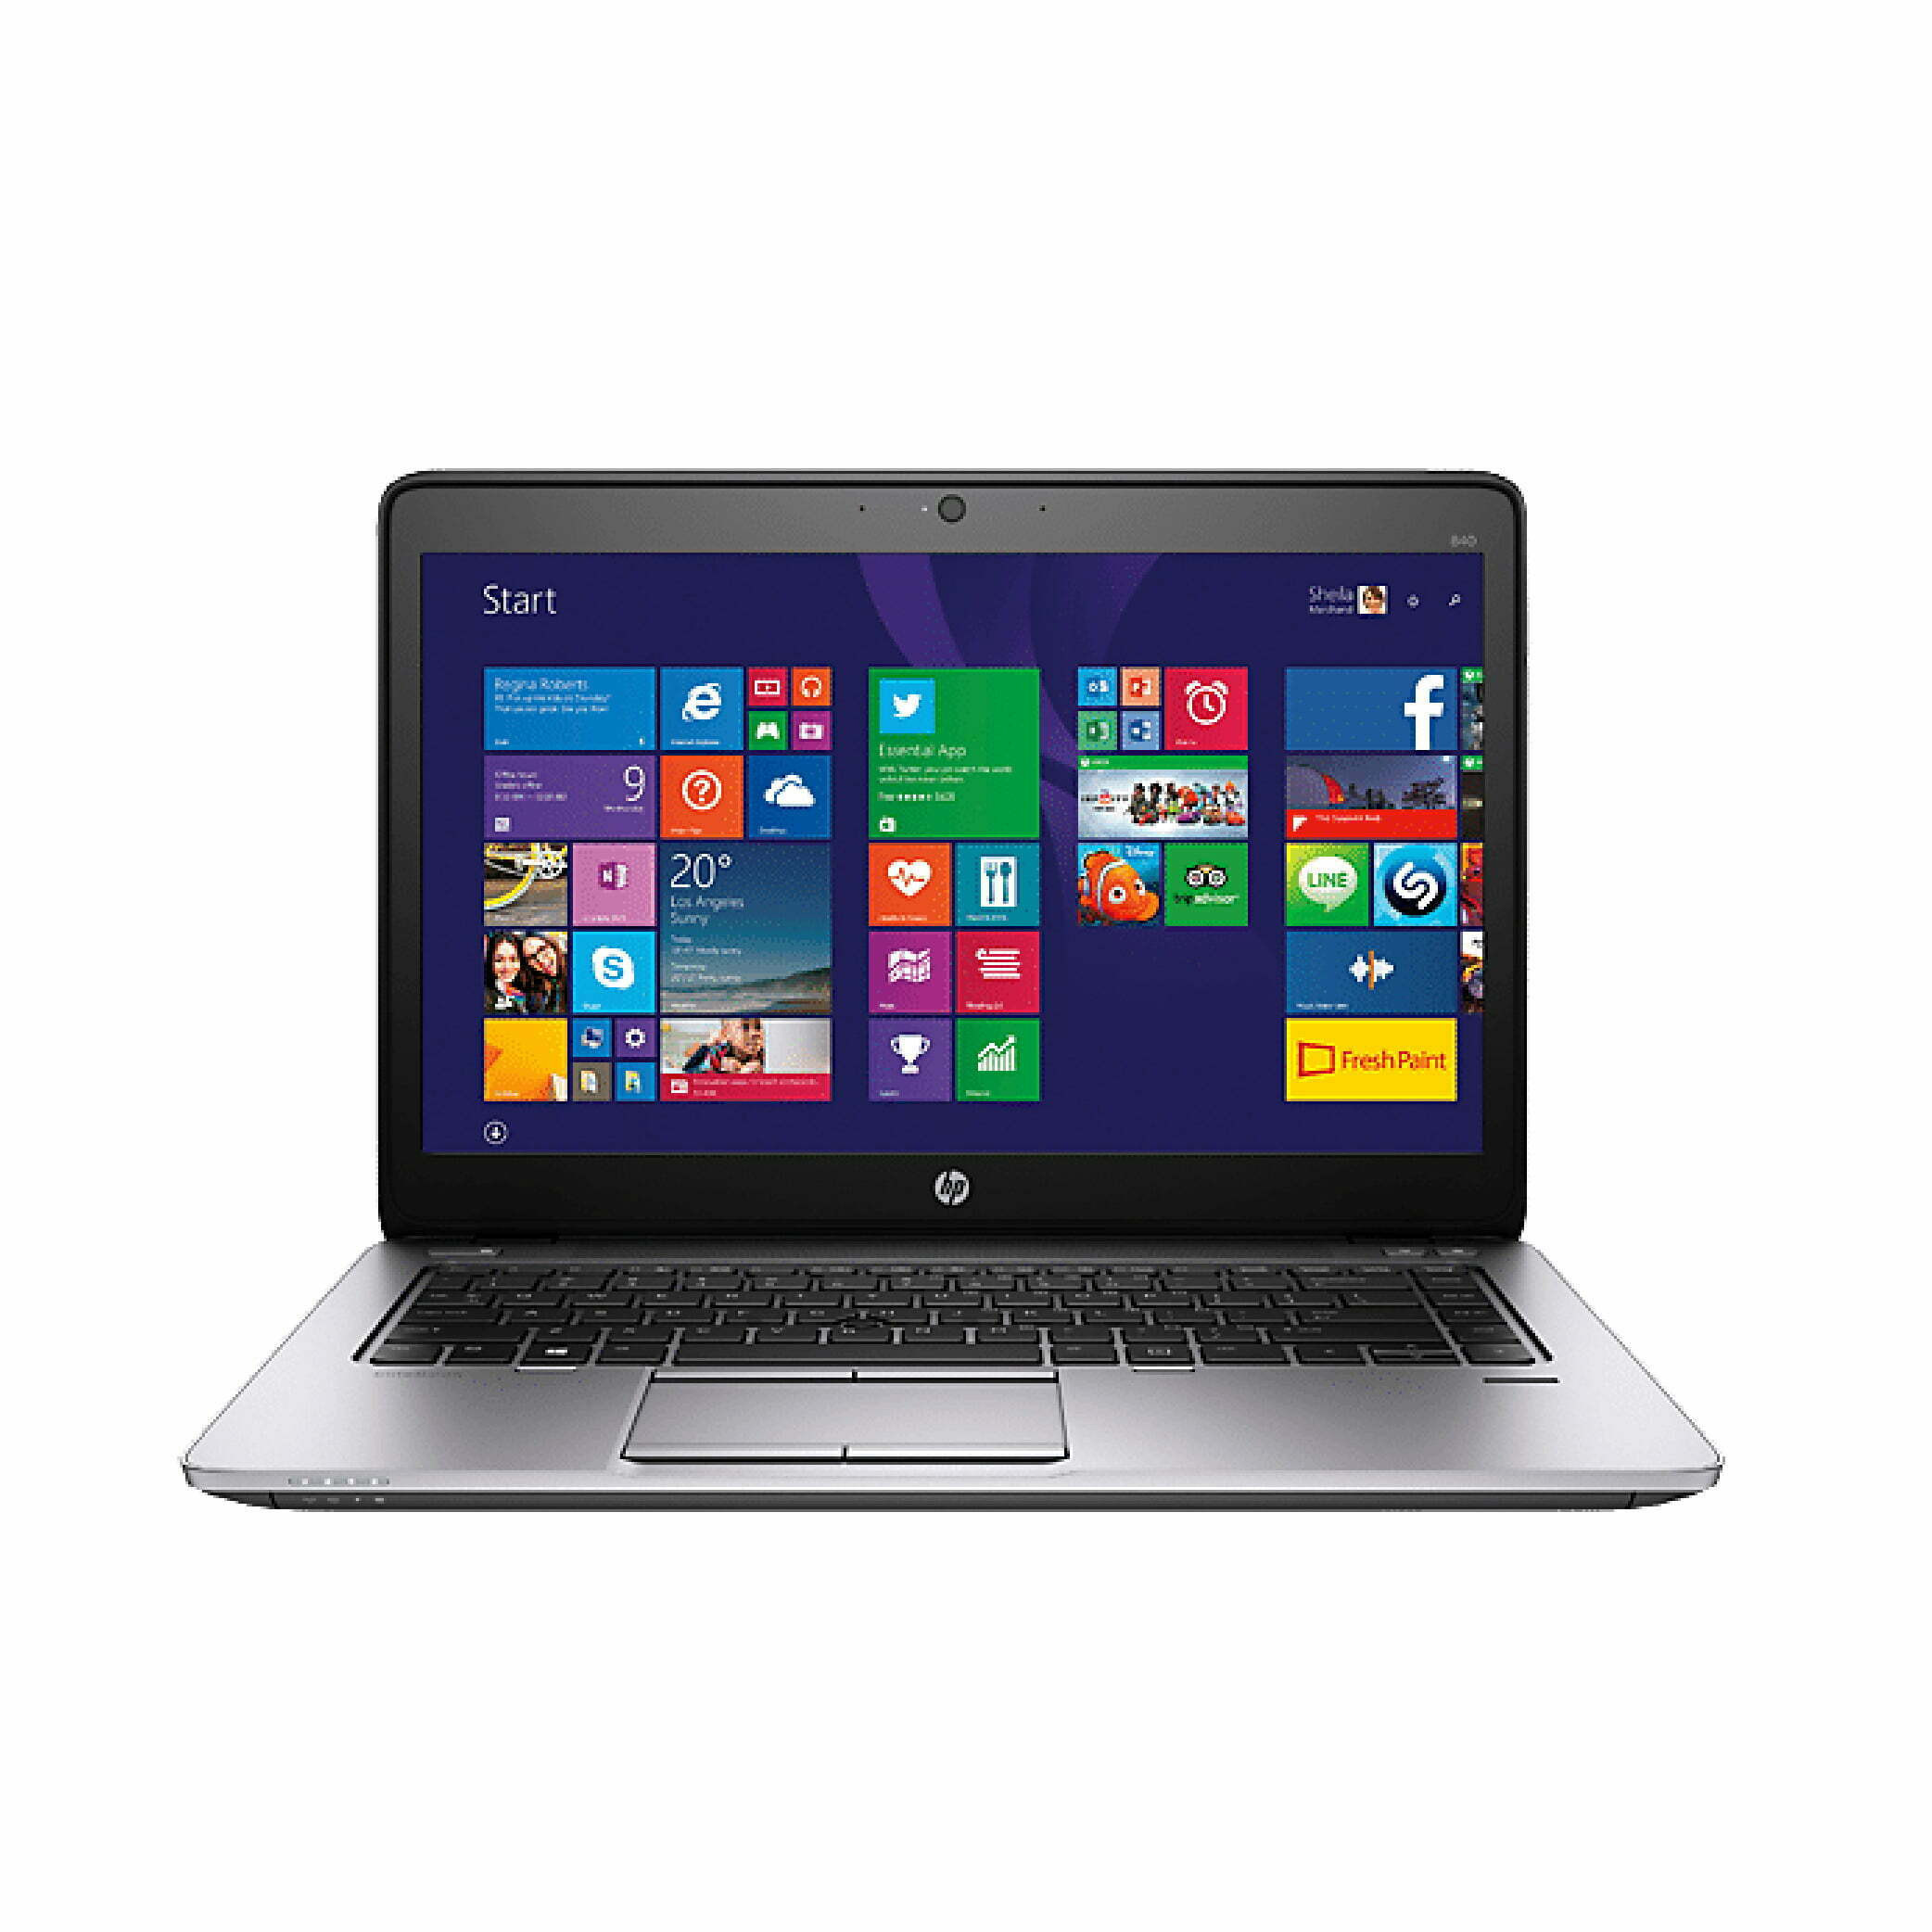 HP EliteBook 840 G2 -Intel Core i7, 4GB RAM, 500GB HDD (Ex-UK)